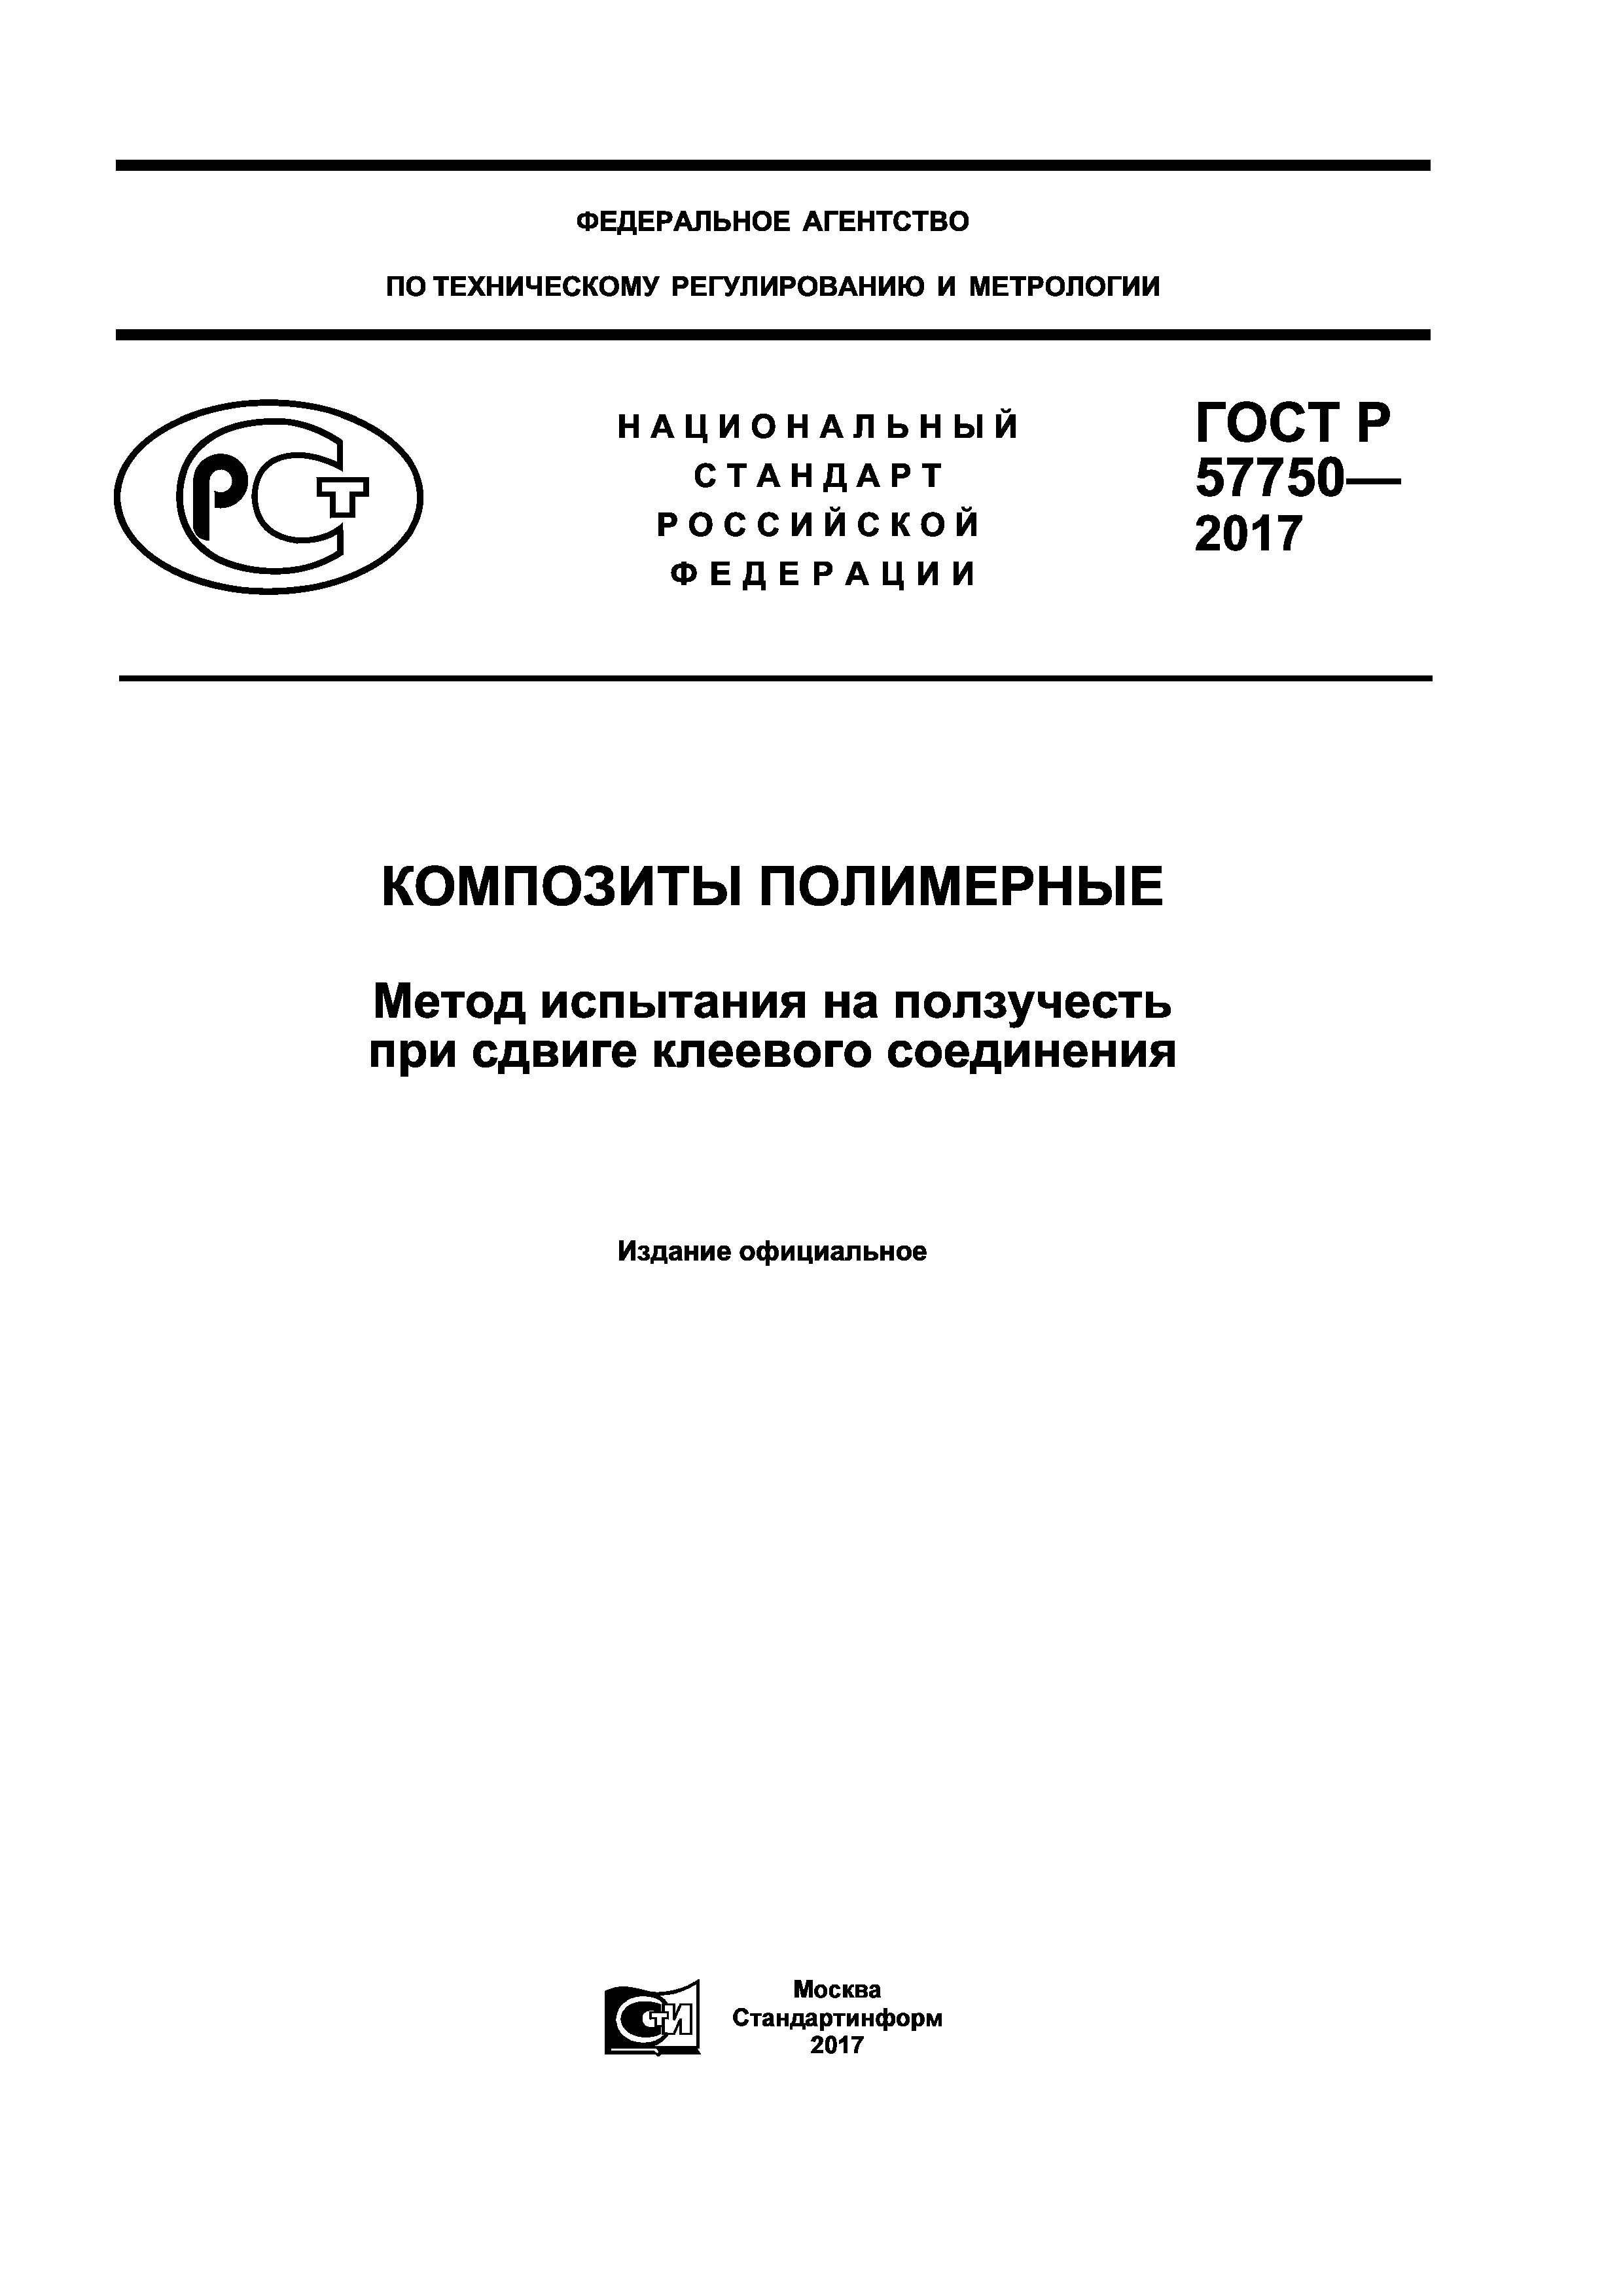 ГОСТ Р 57750-2017